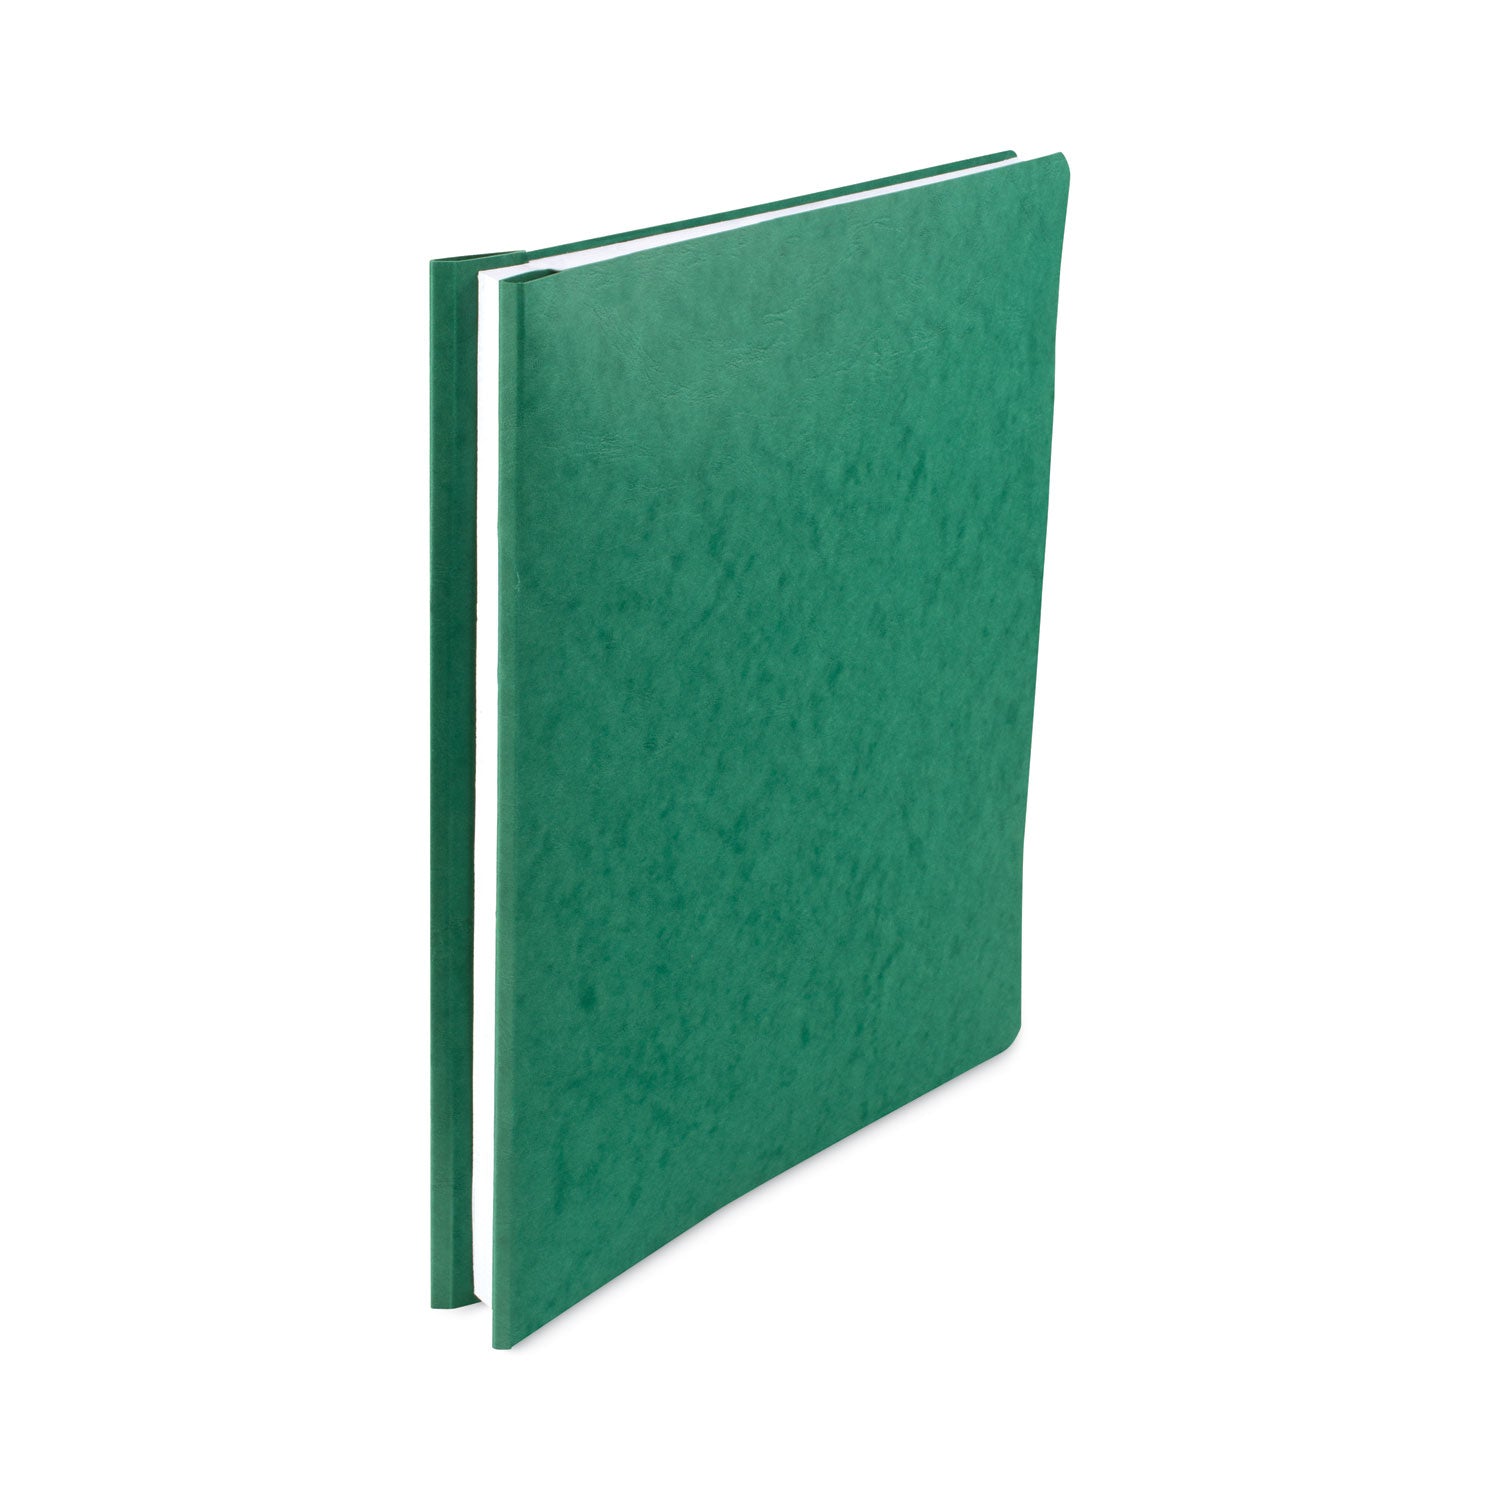 PRESSTEX Covers with Storage Hooks, 2 Posts, 6" Capacity, 14.88 x 11, Dark Green - 